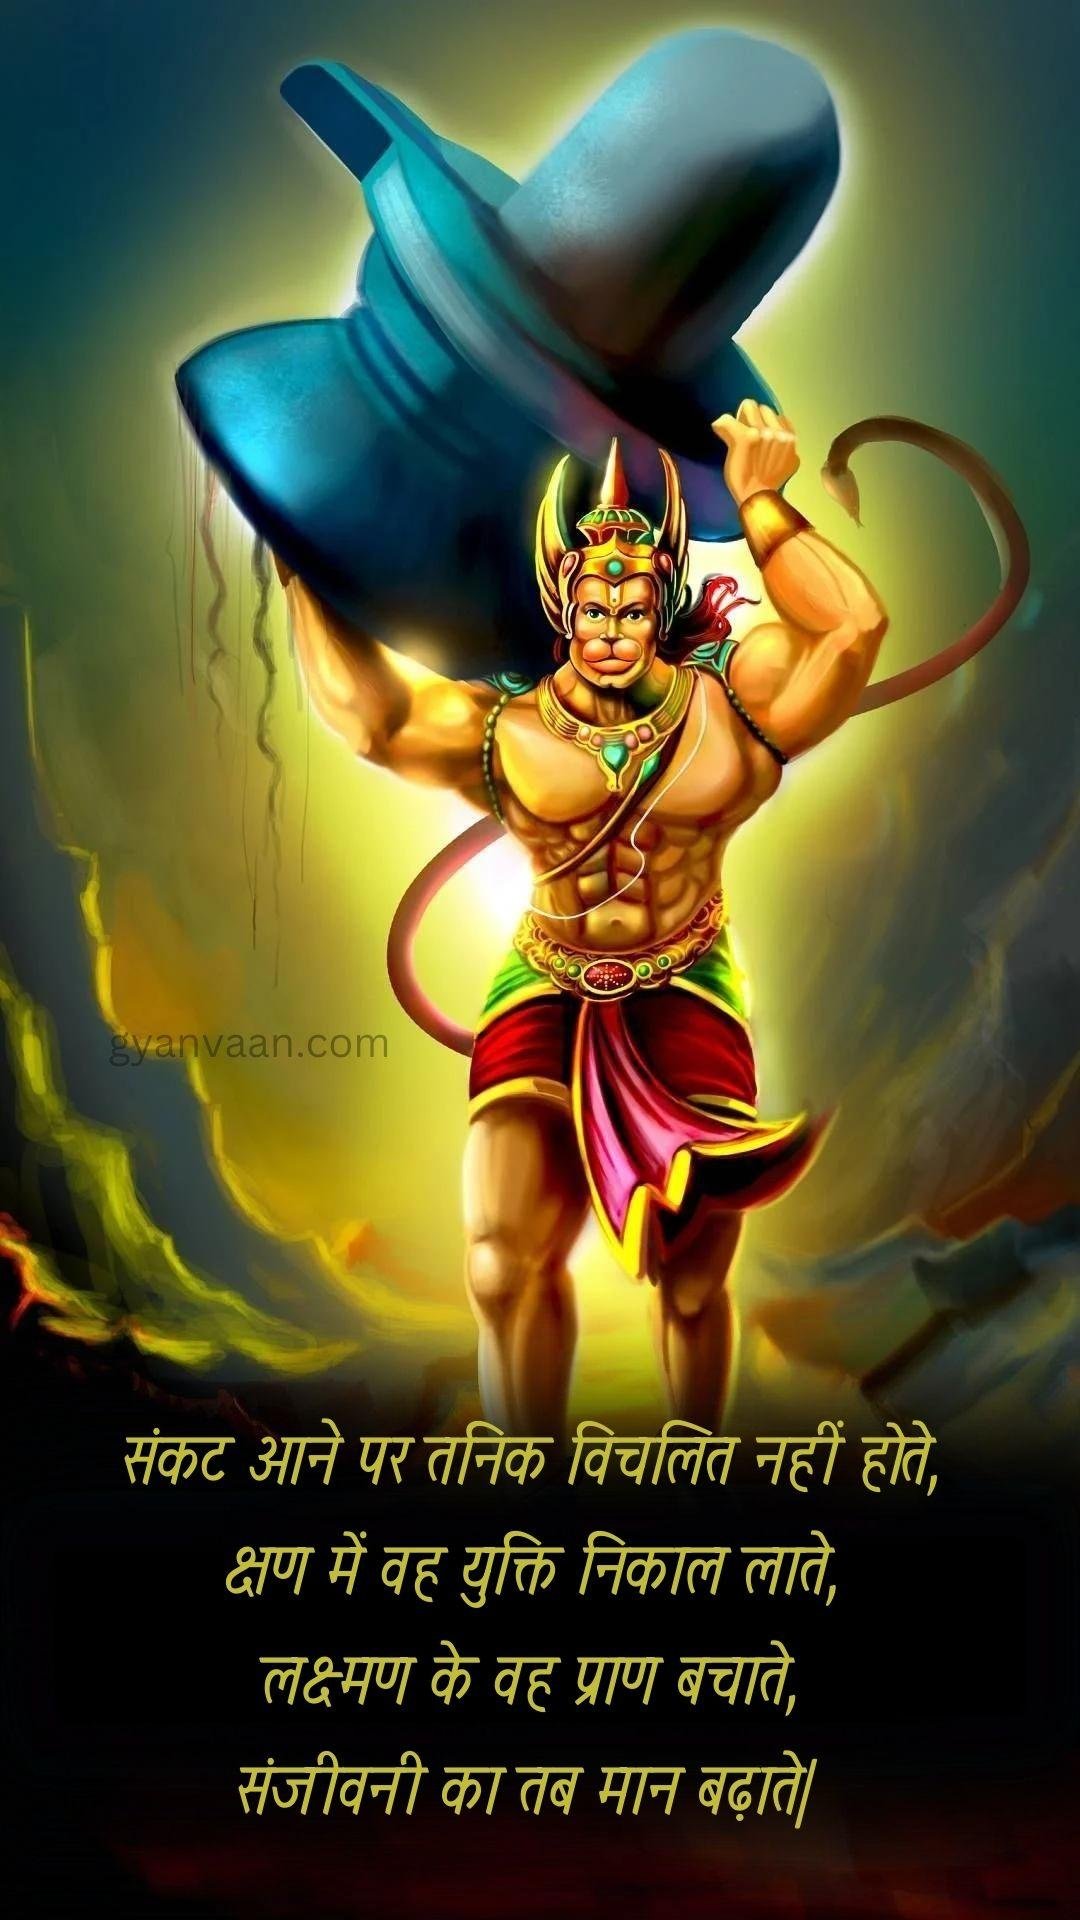 Hanuman Quotes Shayari And Whatsapp Status For Mobile With Hanuman Images And Photos 27 - Hanuman Images